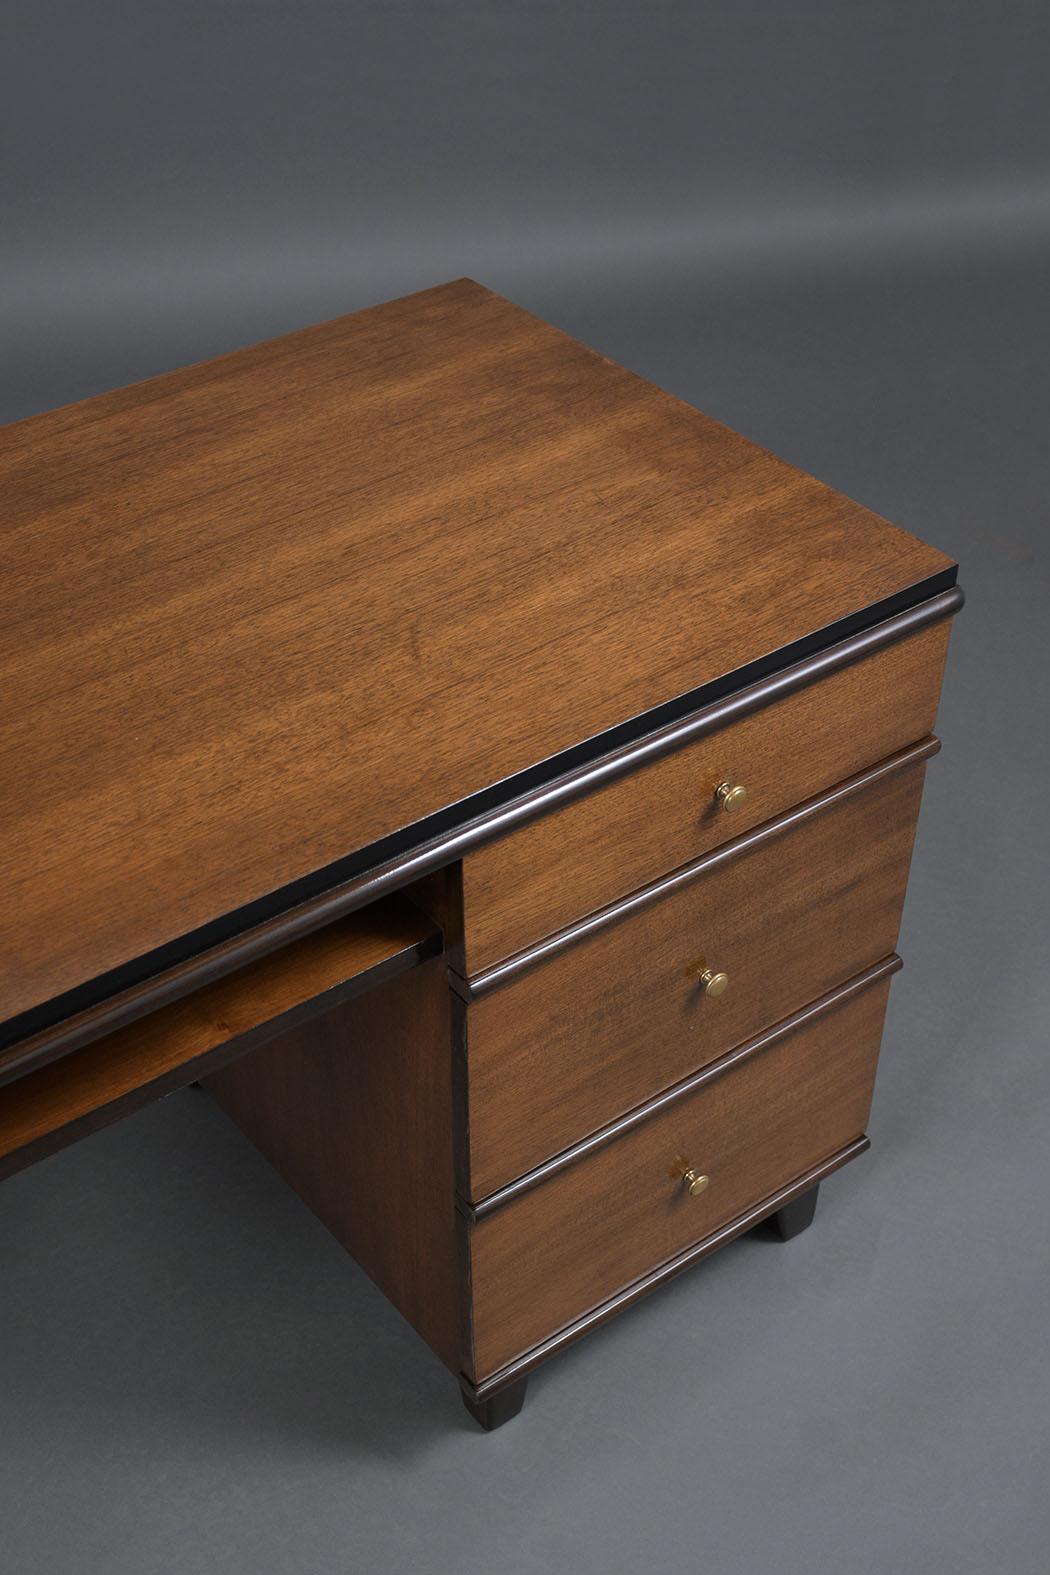 1950s Art Deco Pedestal Desk in Walnut & Ebonized Finish with Brass Accents For Sale 1